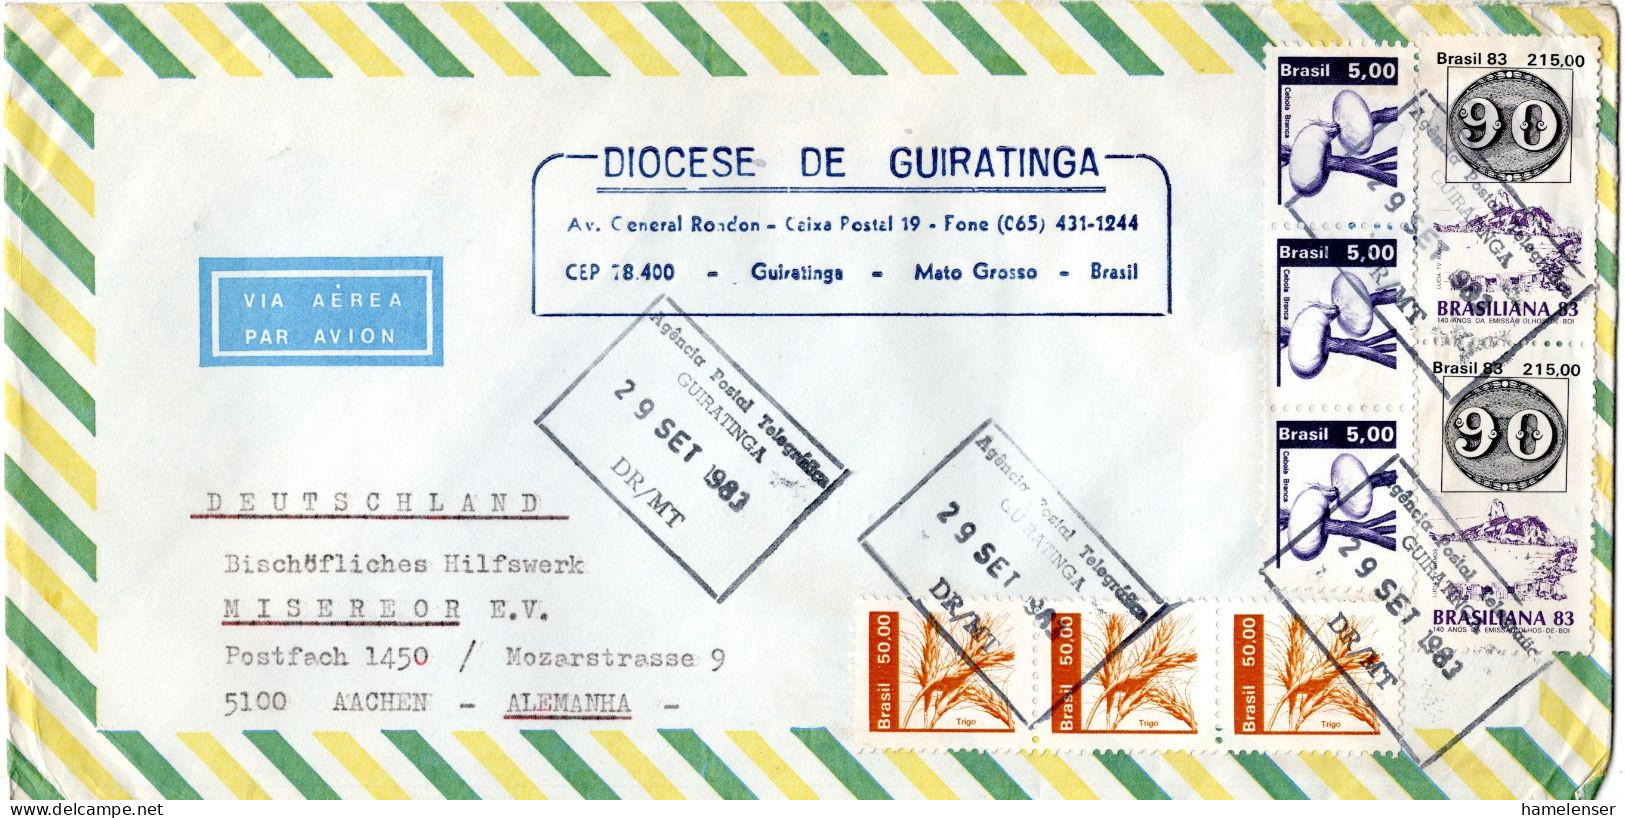 L75020 - Brasilien - 1983 - 2@Cr215,00 Brasiliana '83 MiF A LpBf GUIRATINGA -> Westdeutschland - Storia Postale